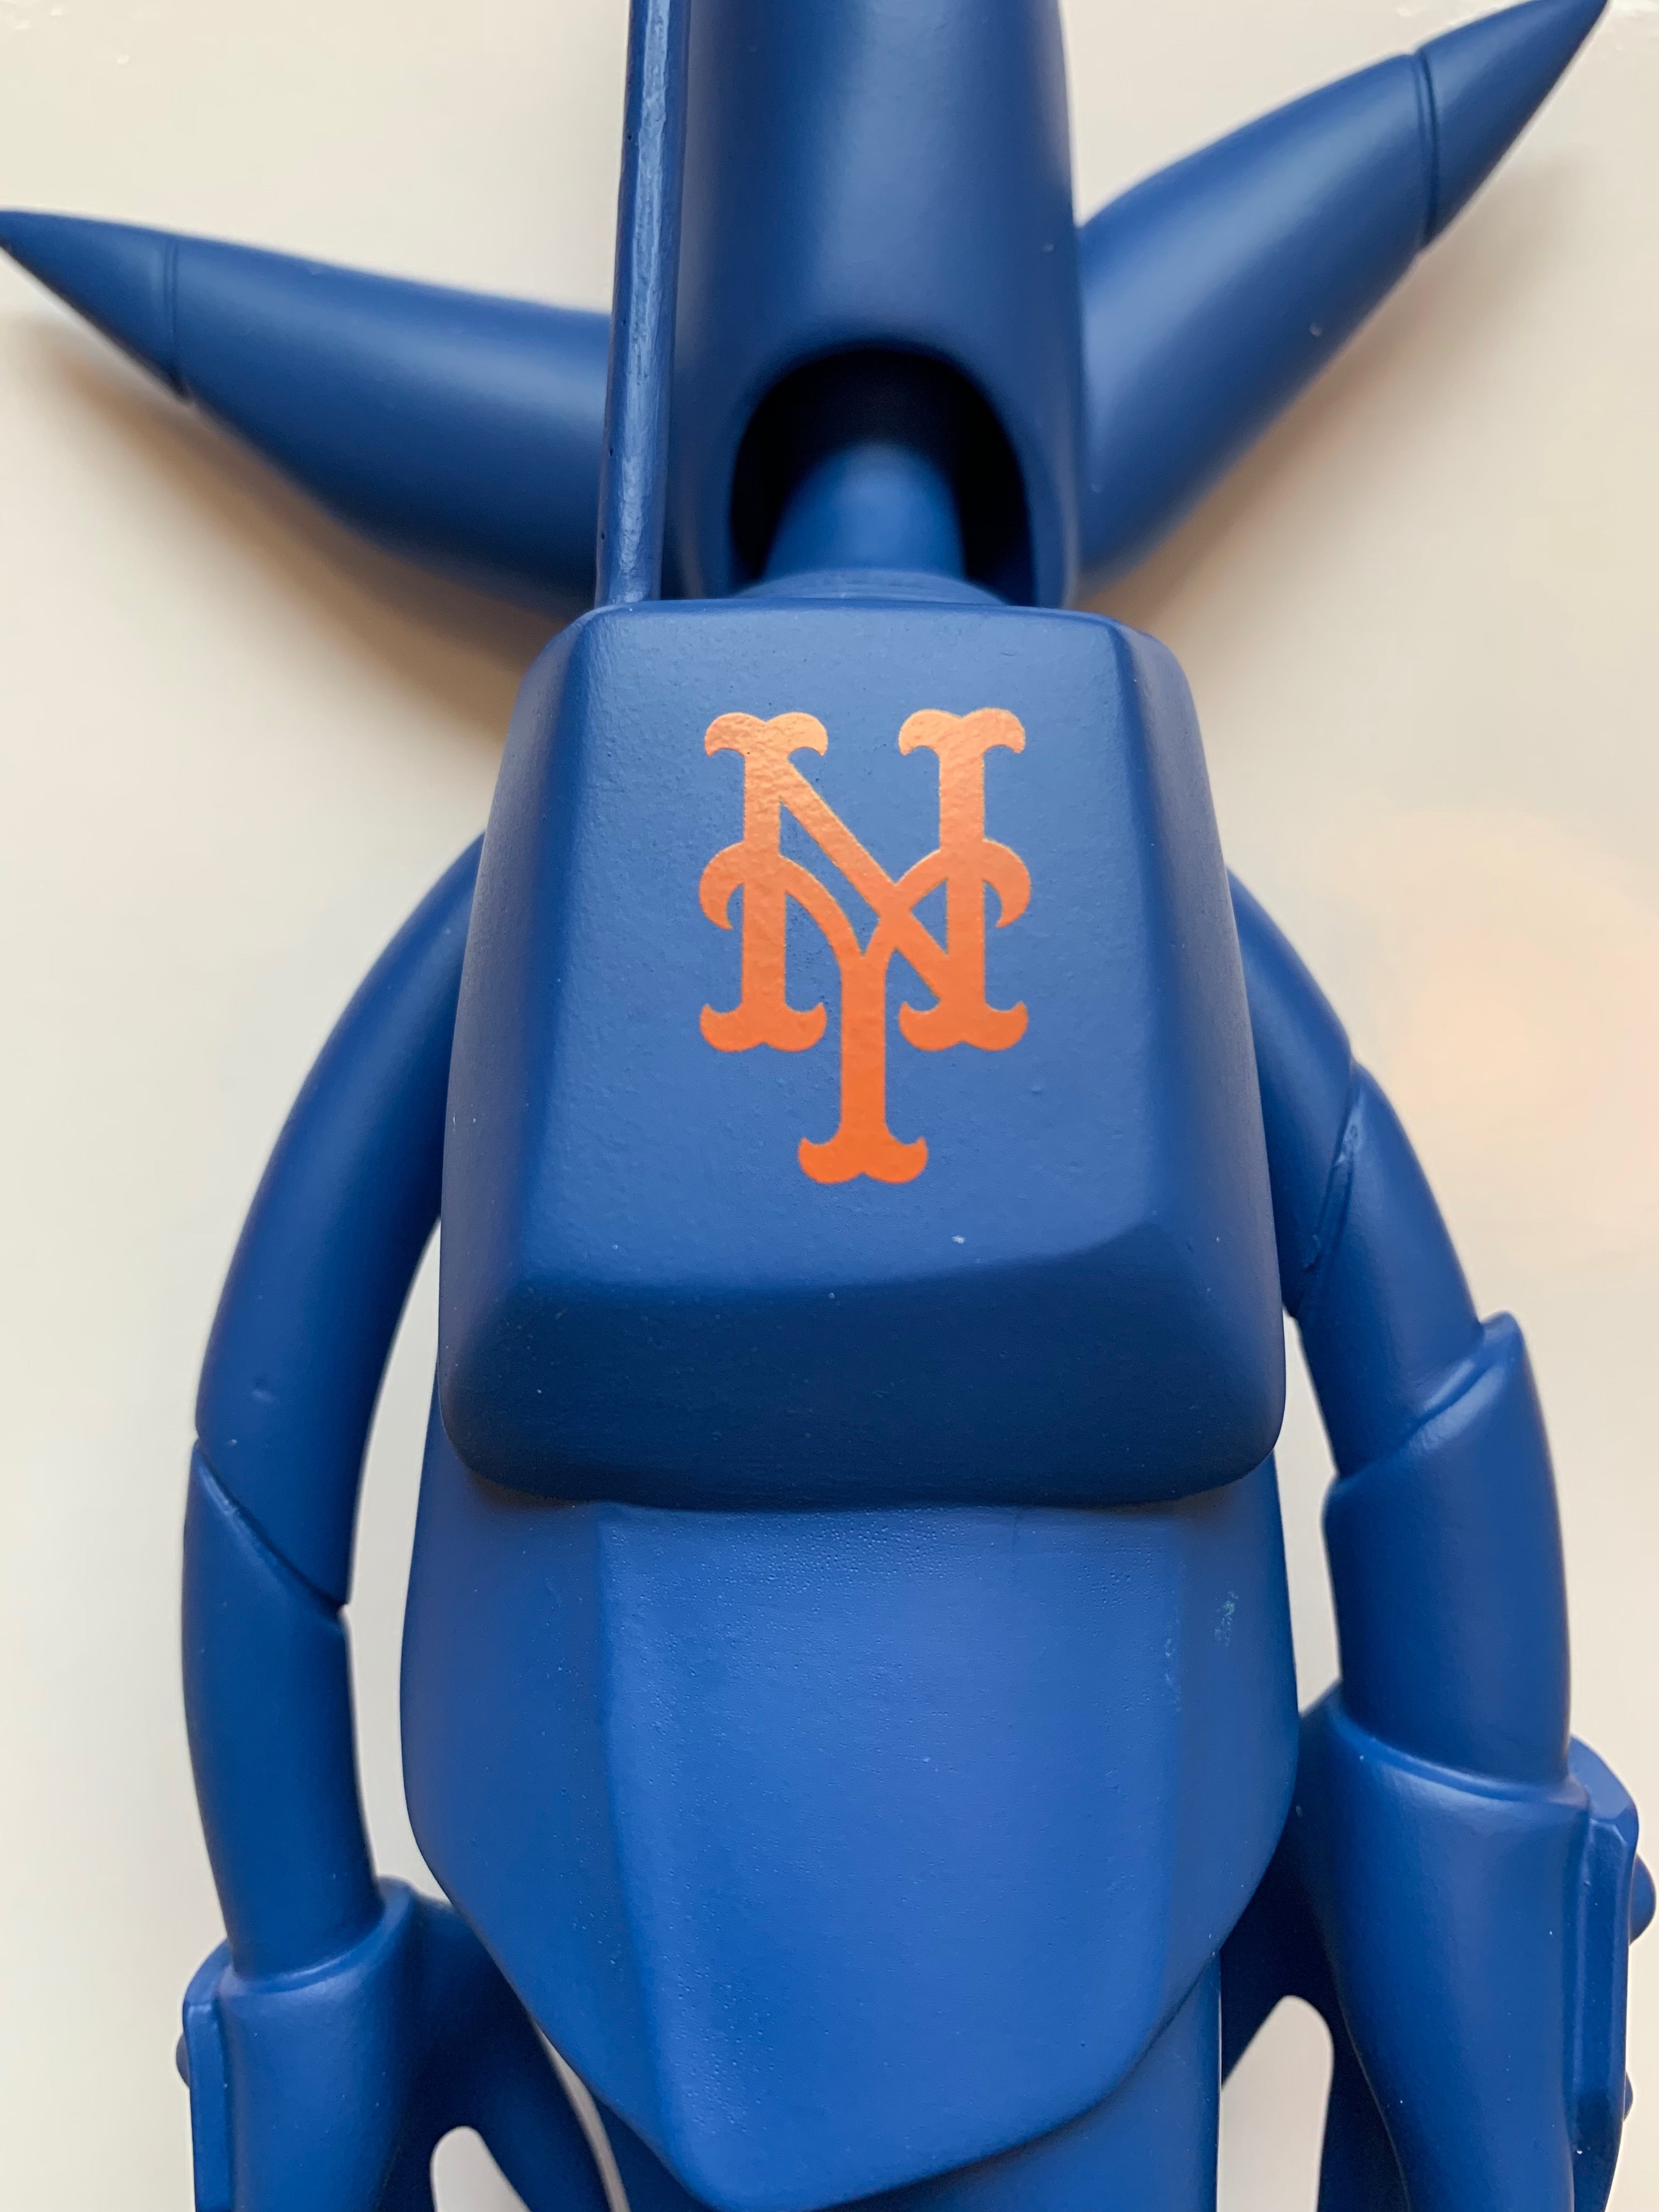 FOCO Releases New York Mets Valentines Day Bobblehead - Metsmerized Online